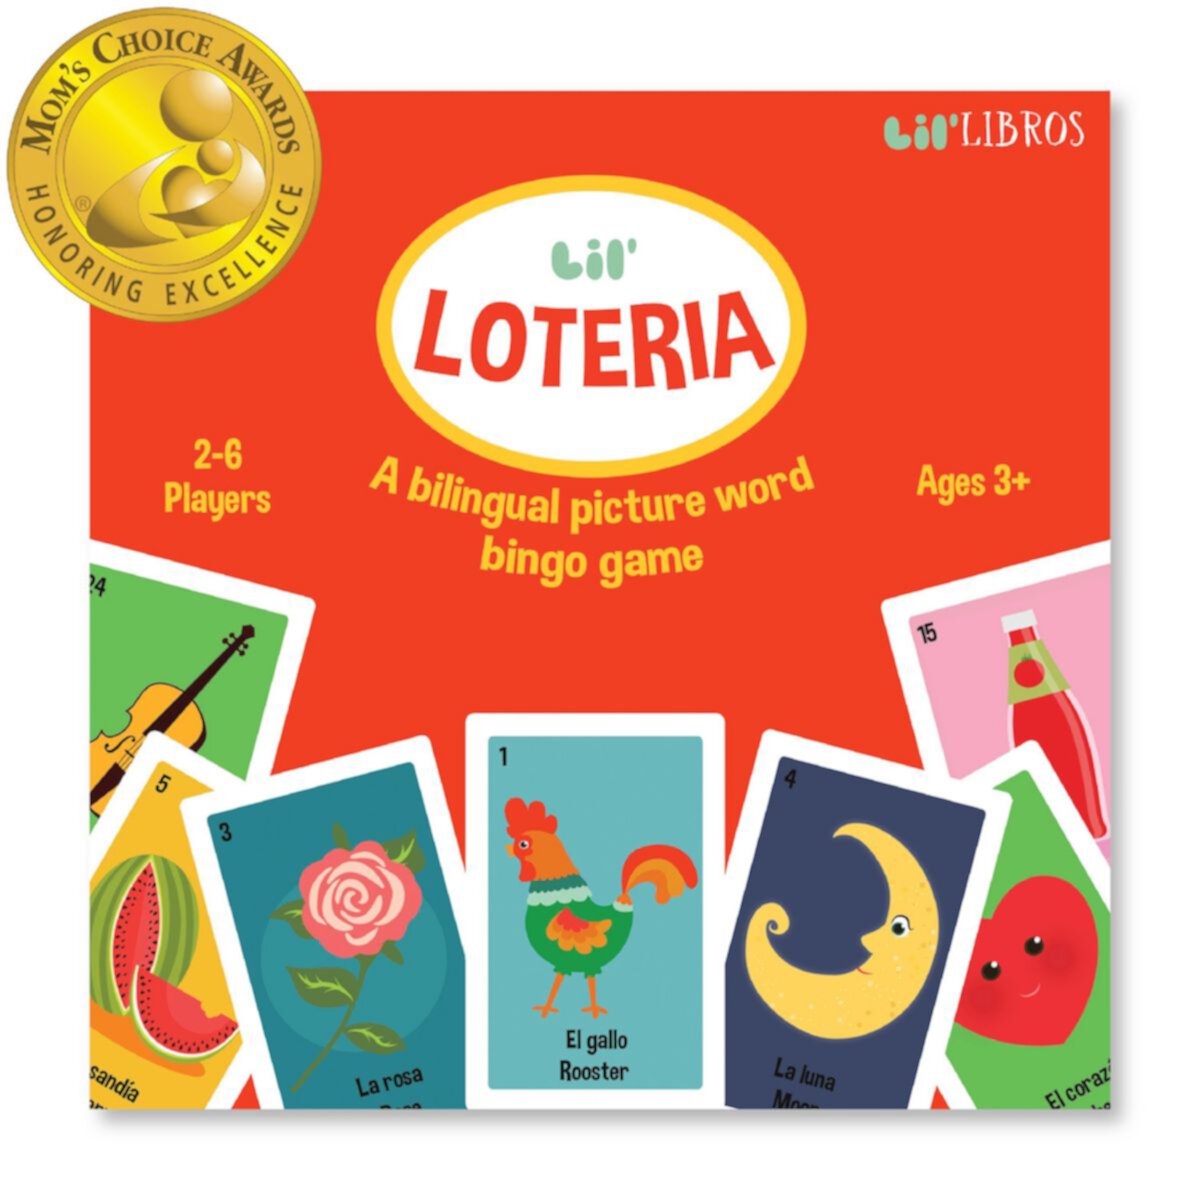 Lil' Libros Lil' Loteria: двуязычная игра в бинго от Lil' Libros Lil' Libros